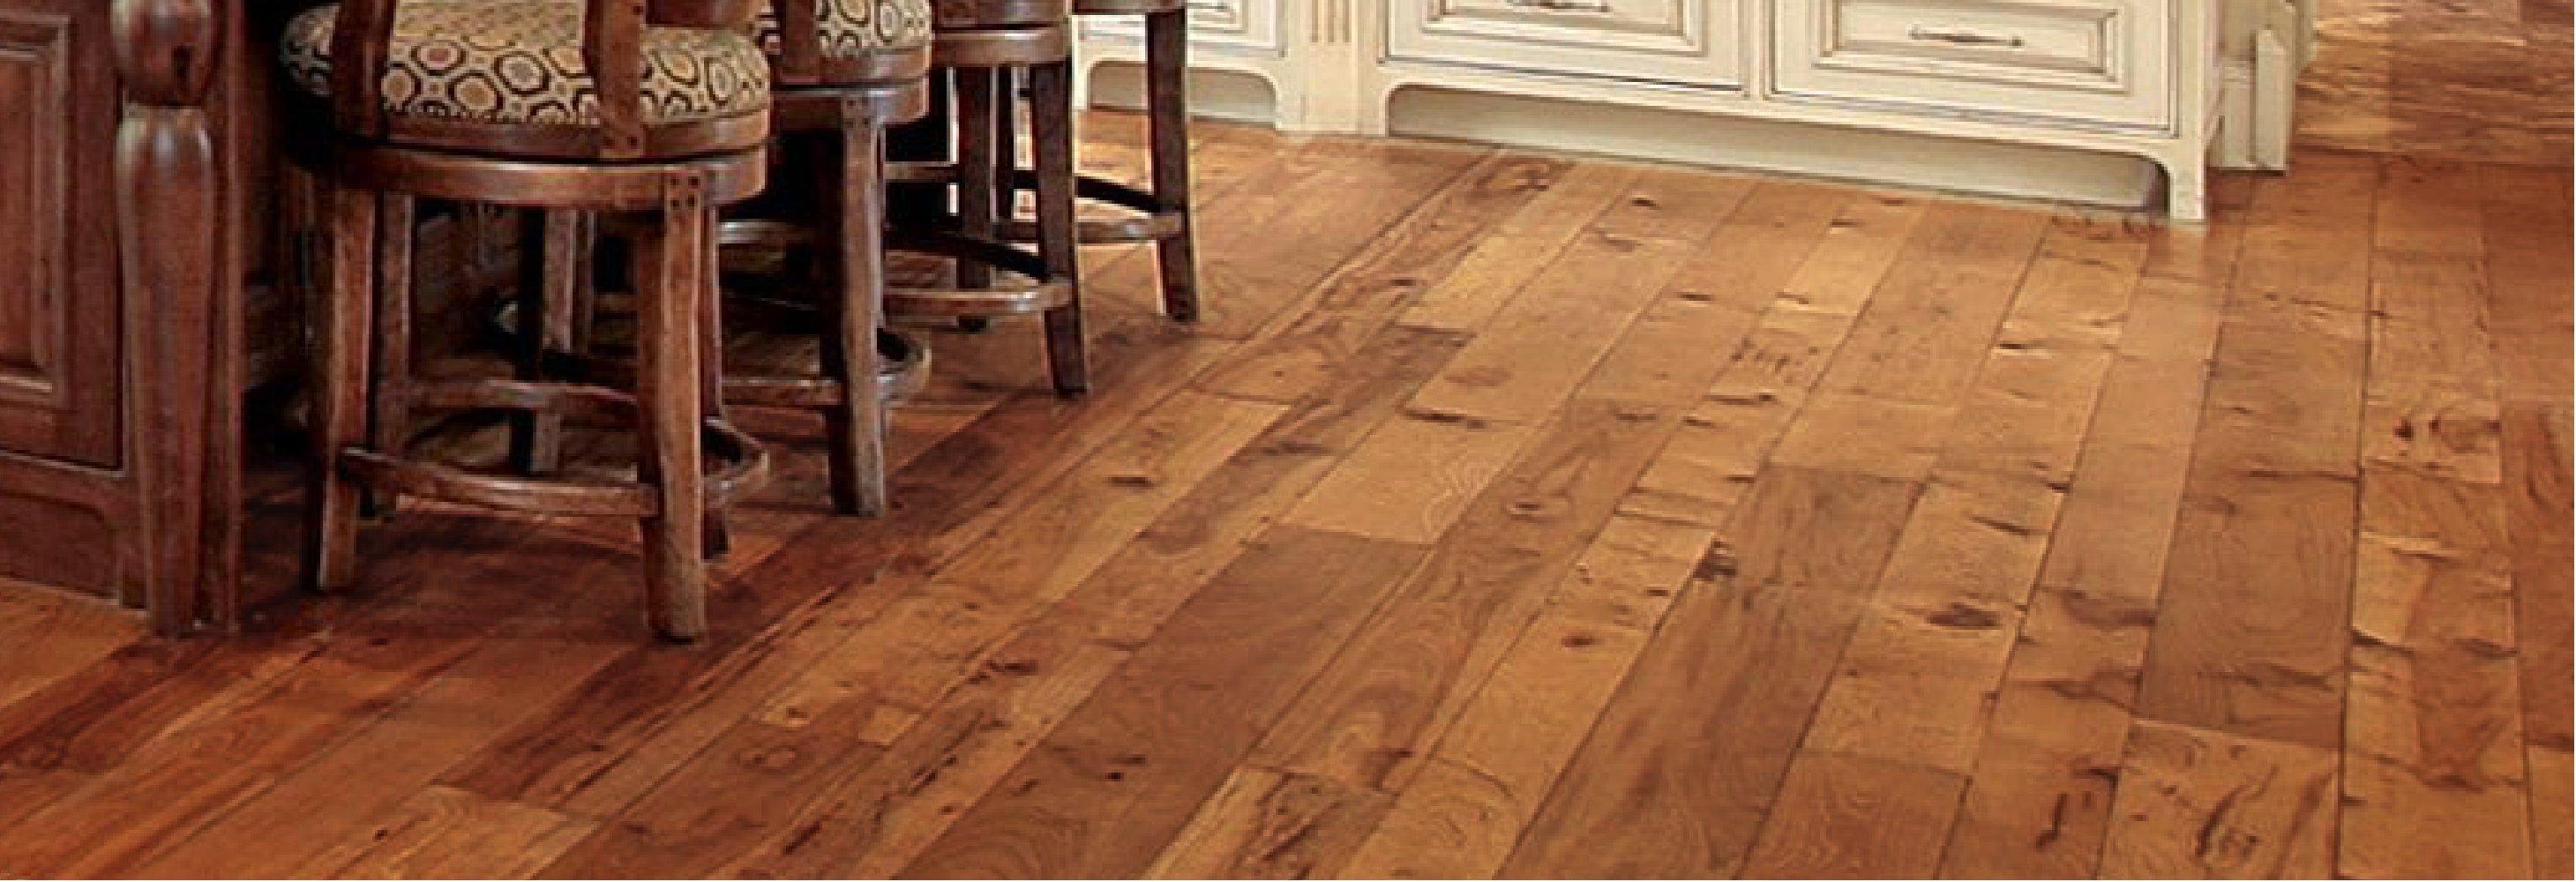 oak floors oak wood flooring ILJAJQE